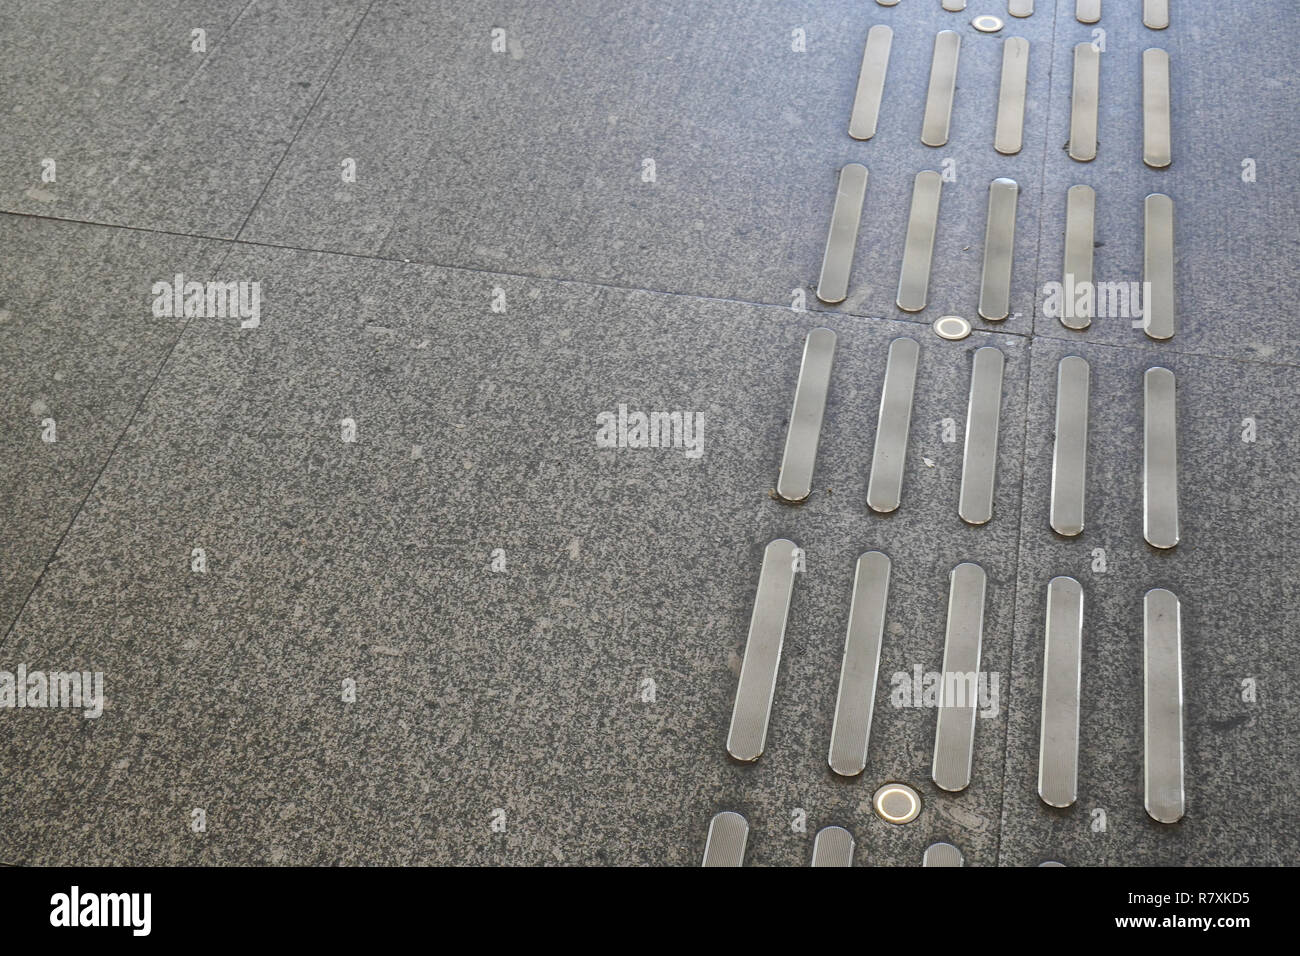 Floor marking for blind people, Madrid, Spain Stock Photo